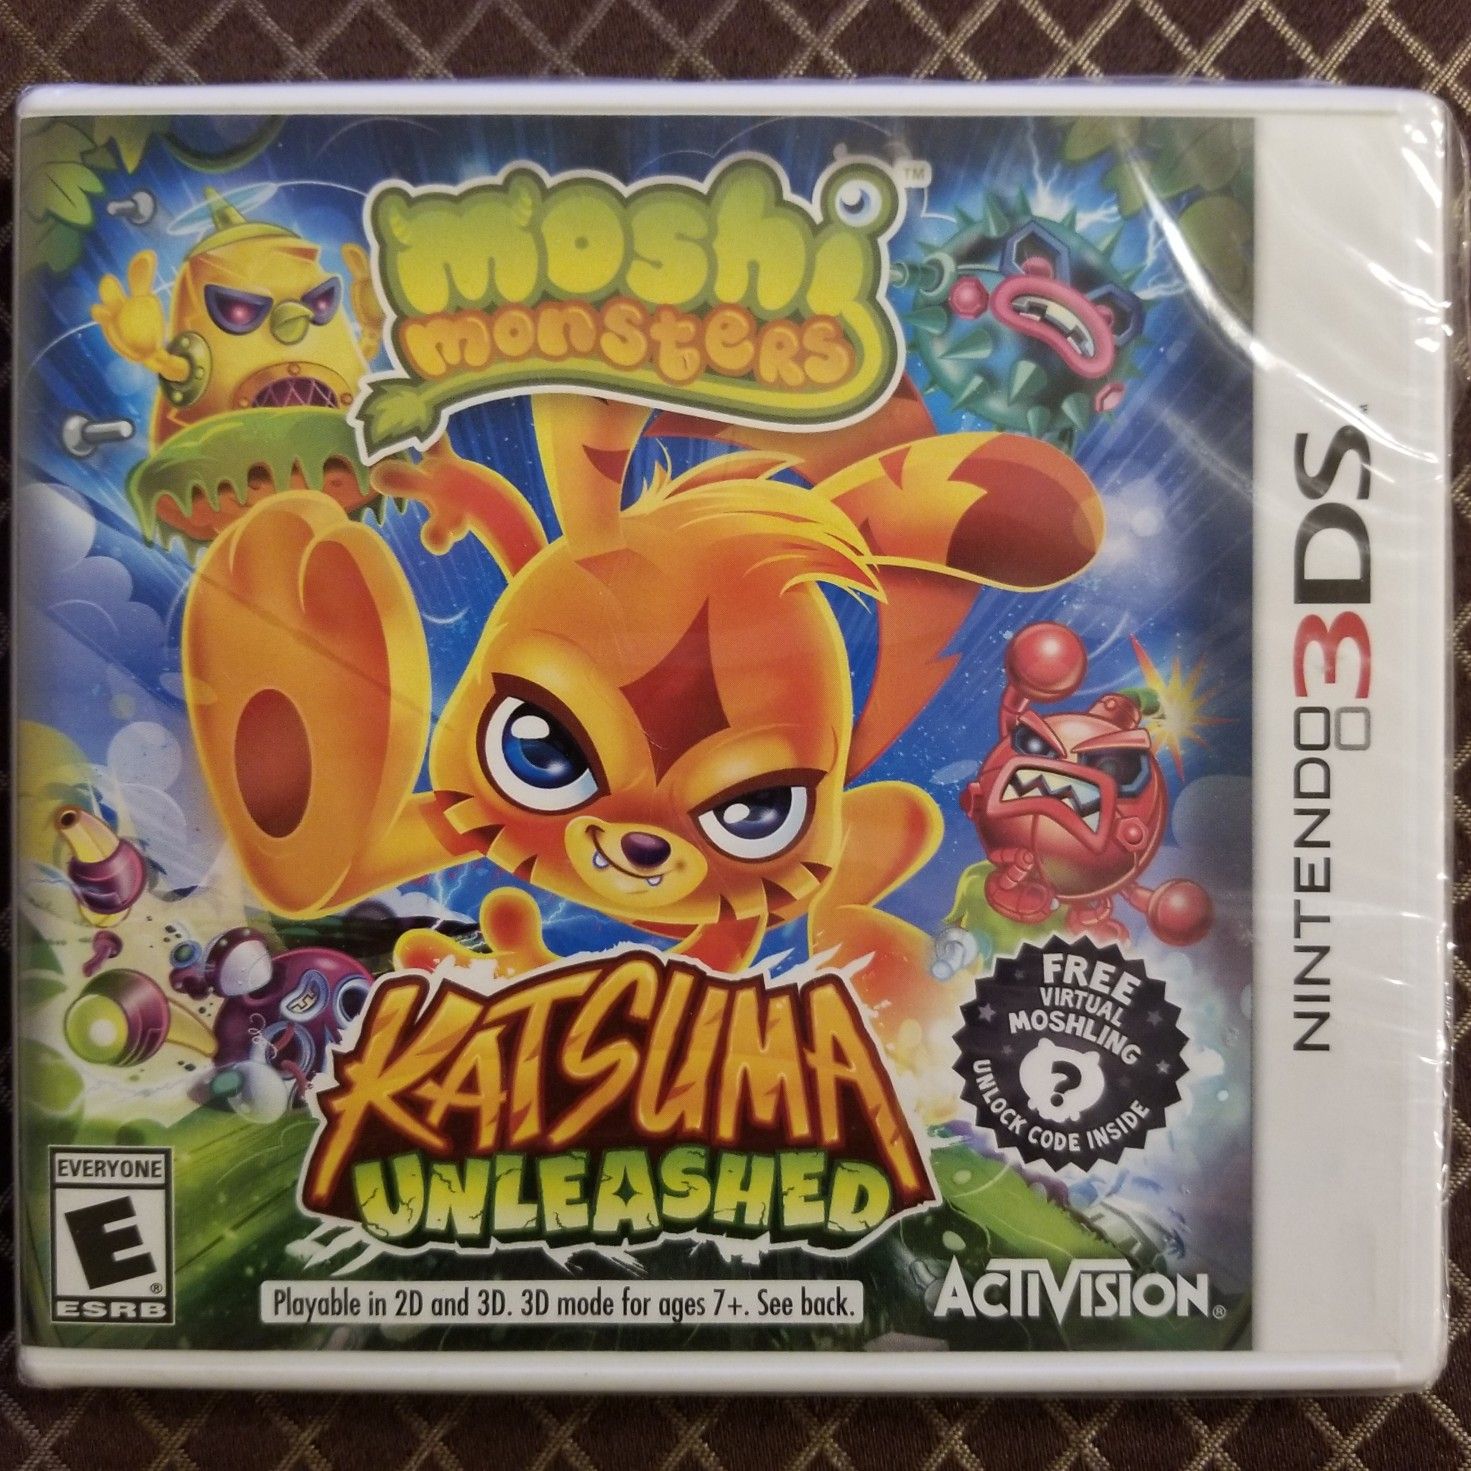 Moshi Monsters Katsuma Unleashed Nintendo 3DS Video Game